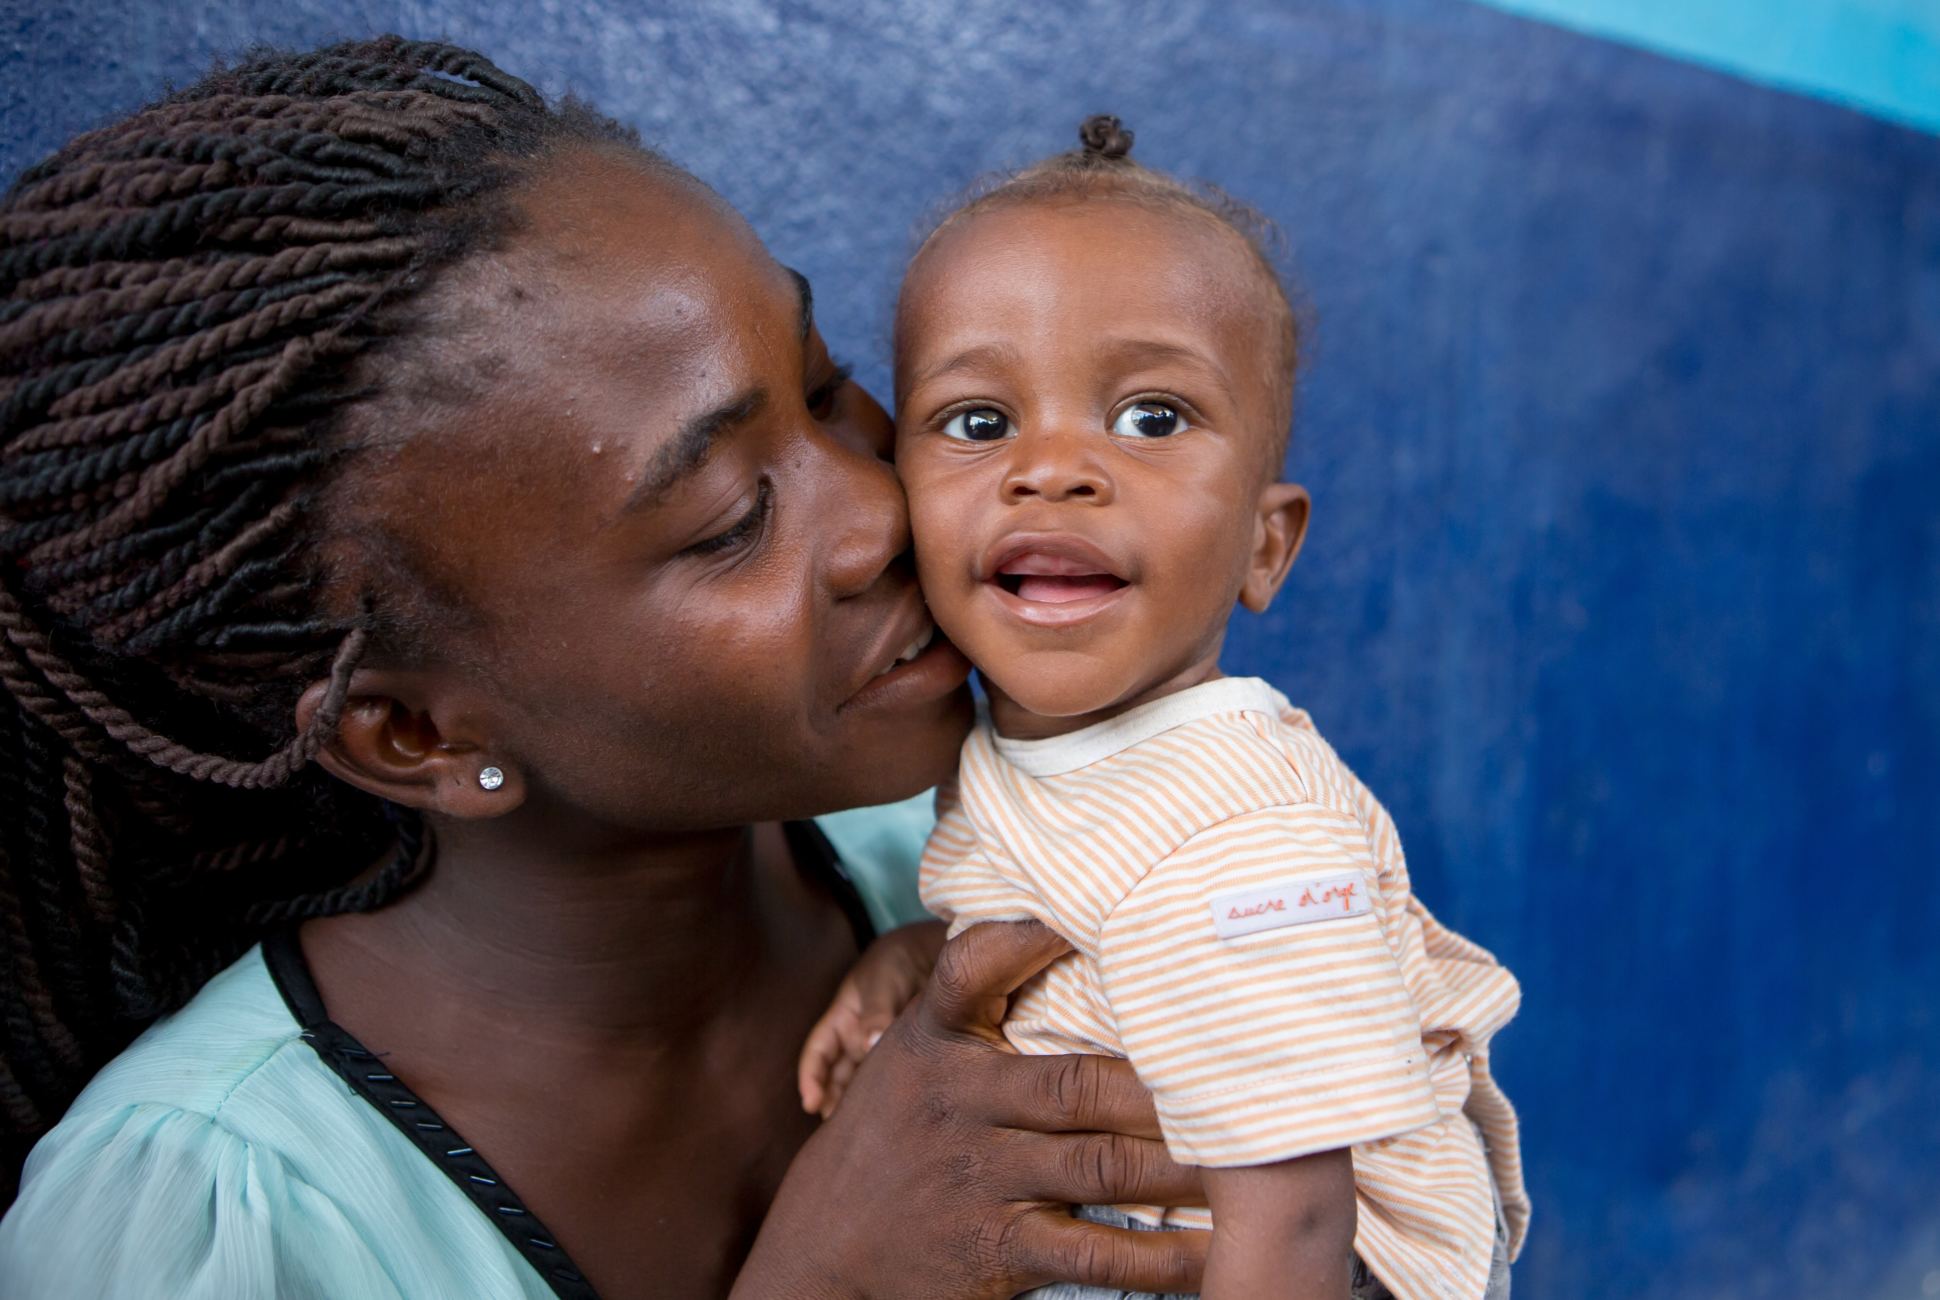 Louis Vuitton & UNICEF's Partnership: Promising a Better Future for  Children